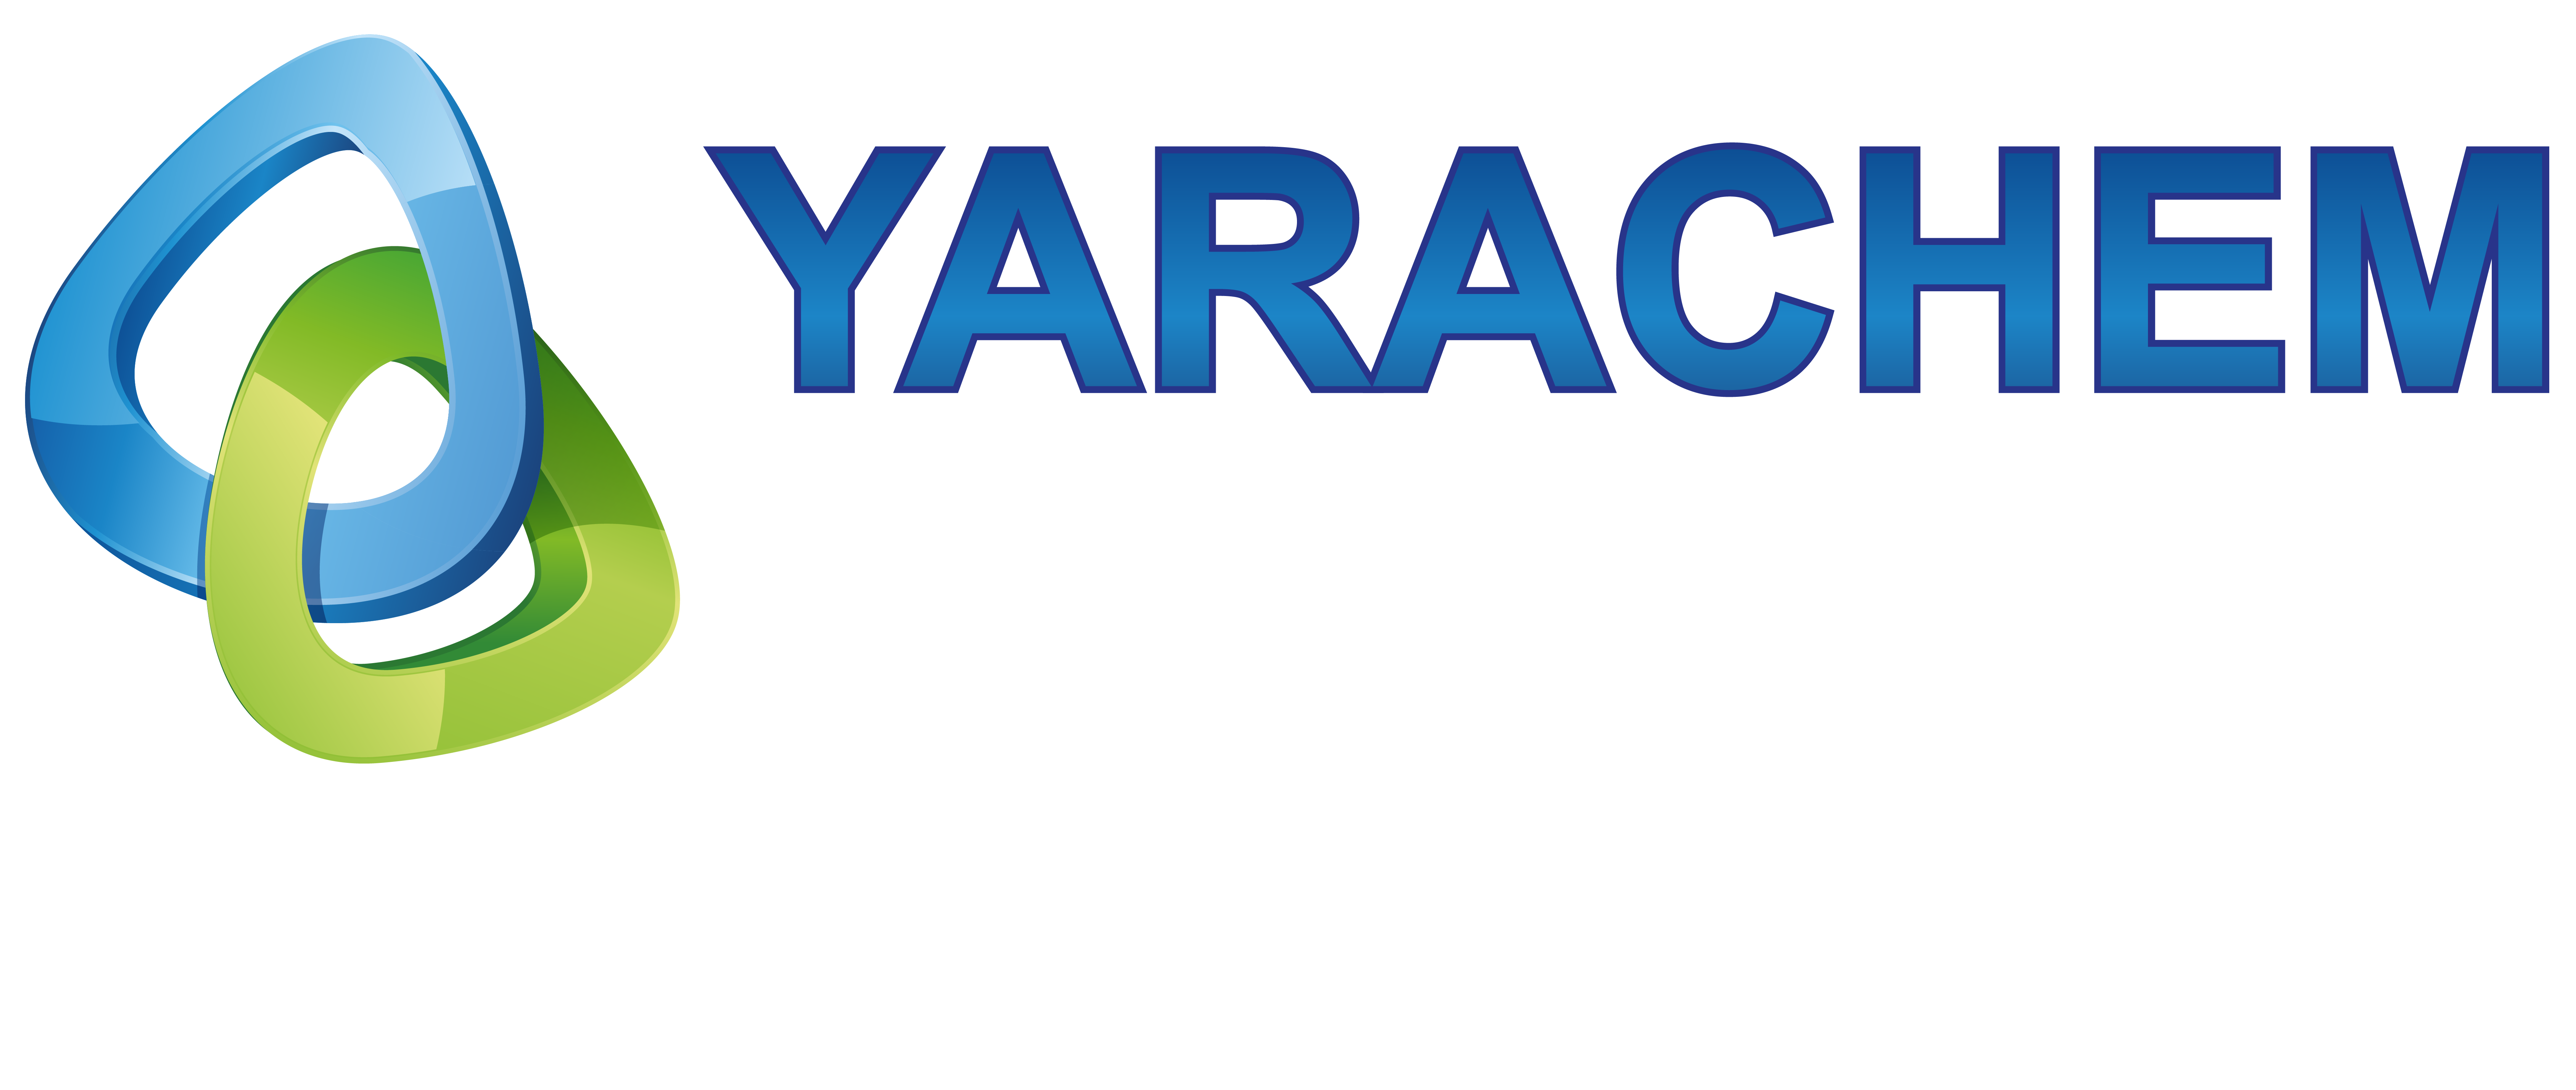 Yara Chemical Solutions